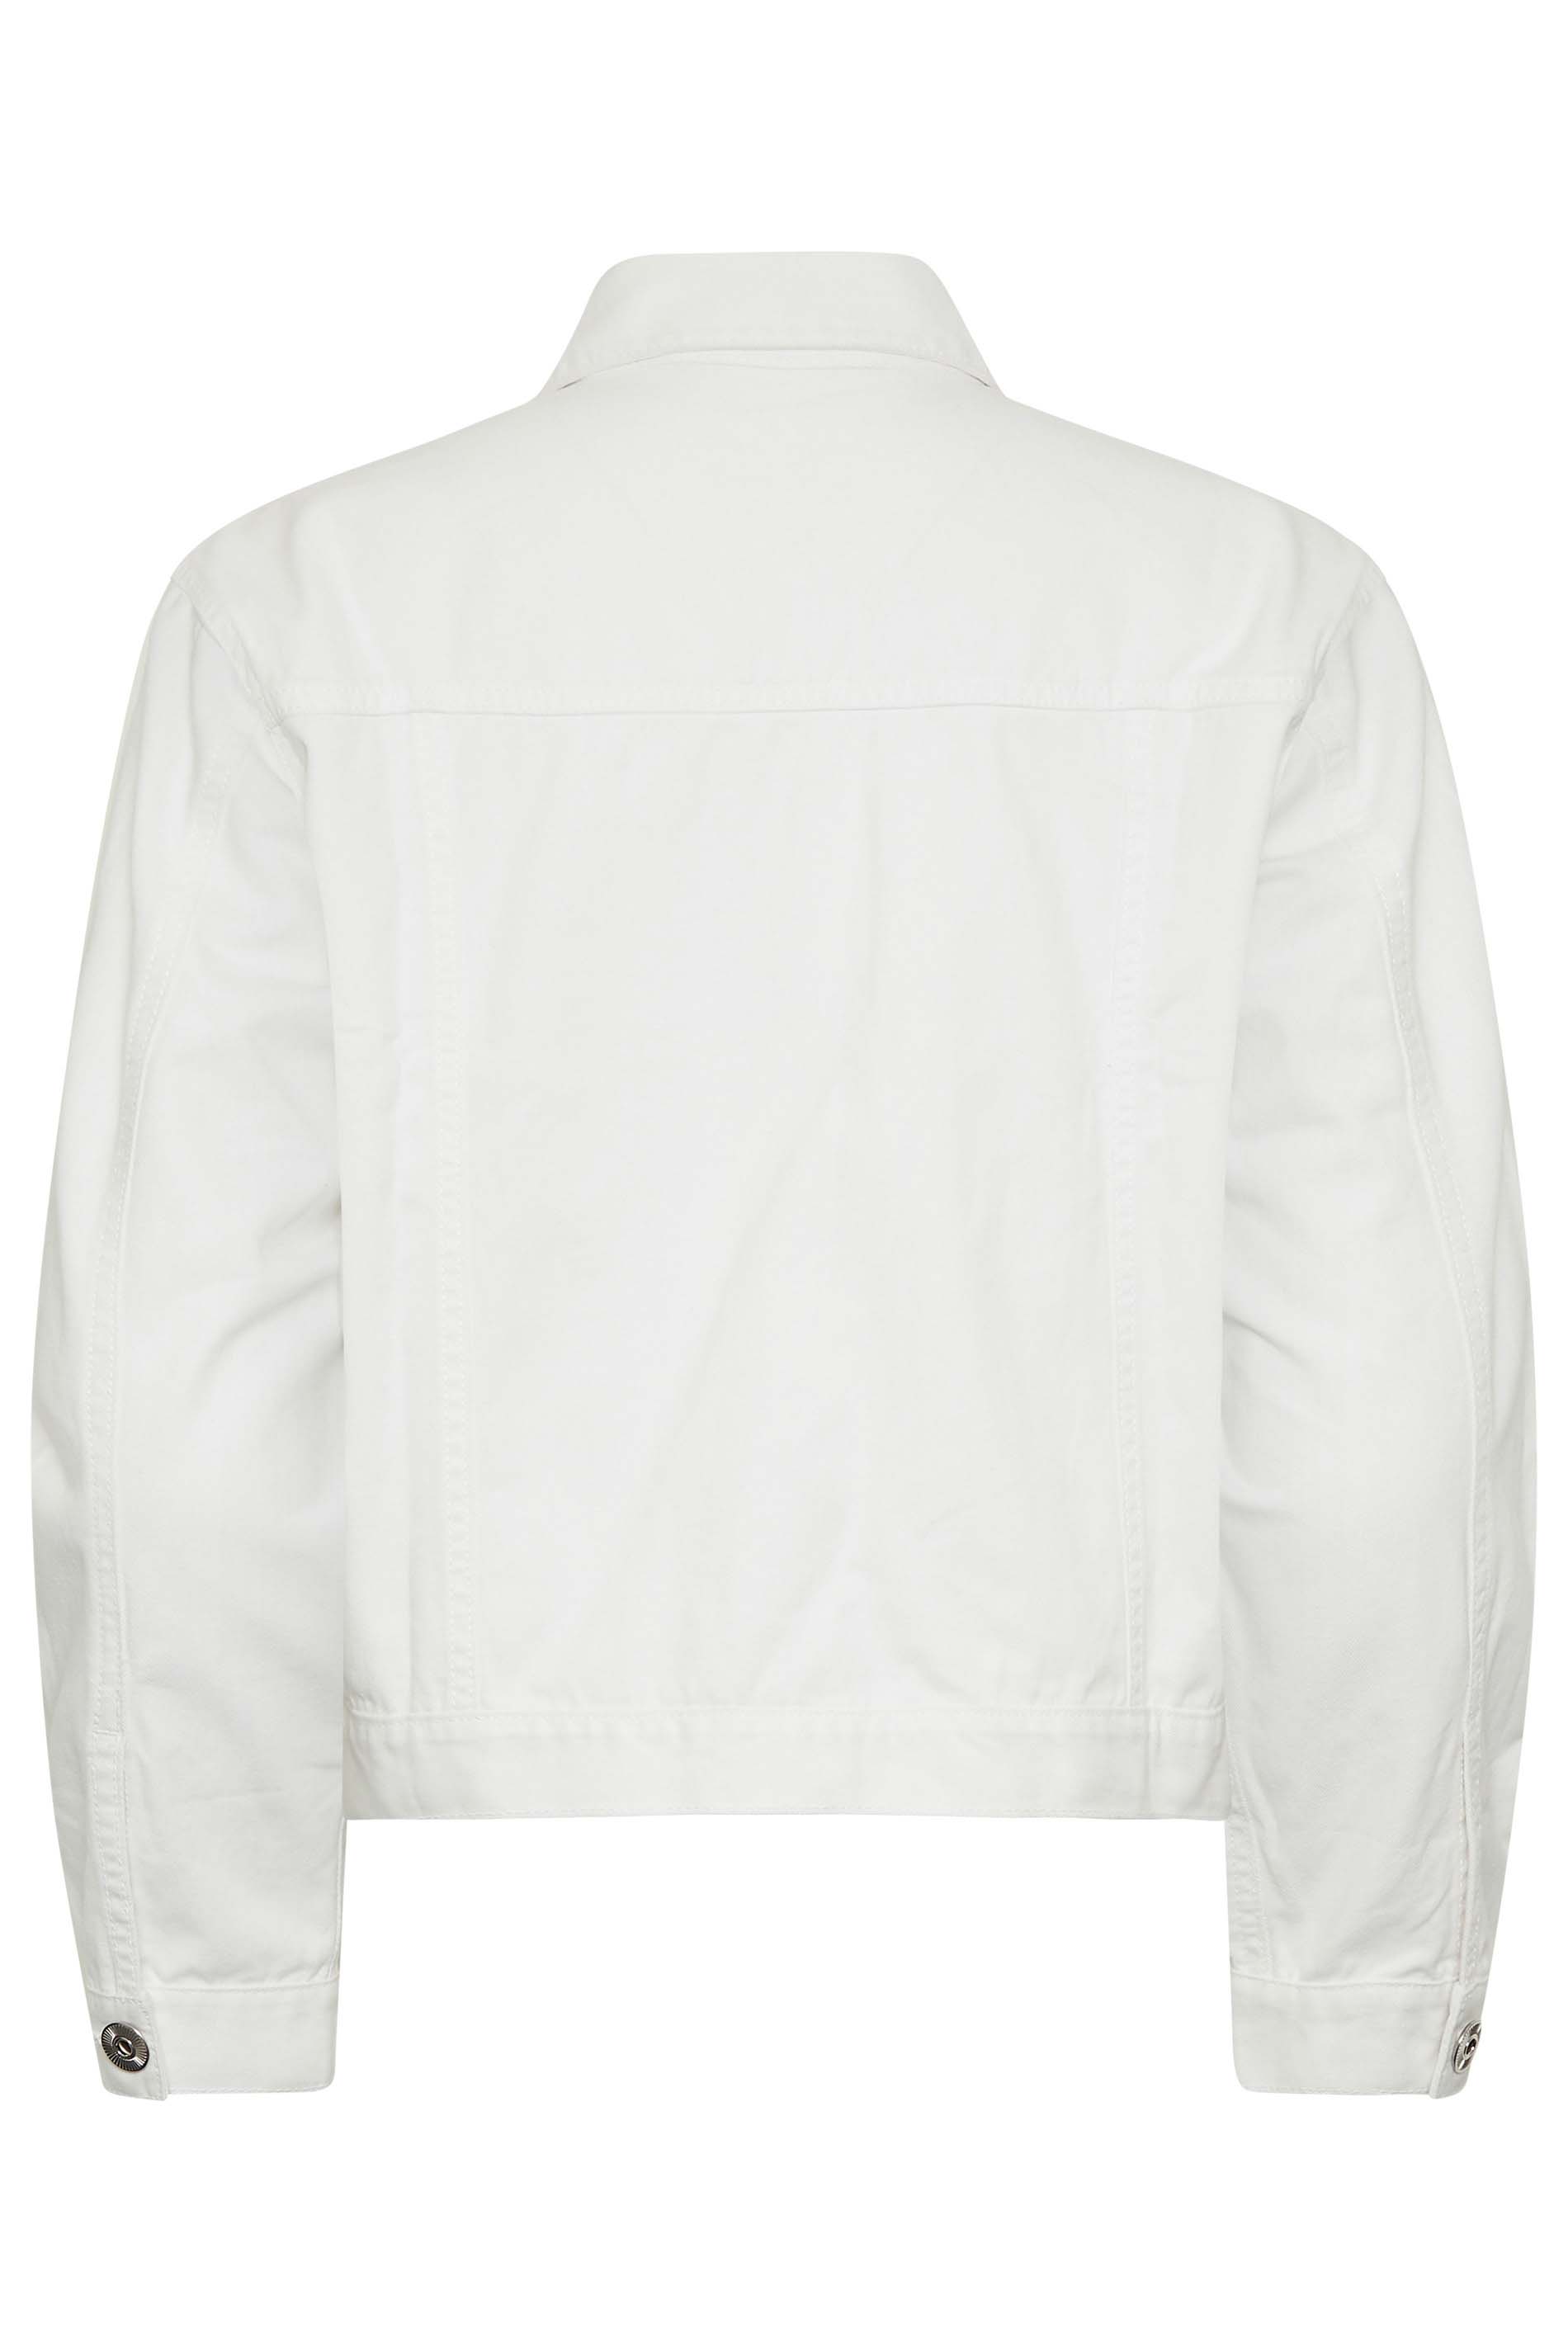 YOURS PETITE Plus Size White Denim Jacket | Yours Clothing 2